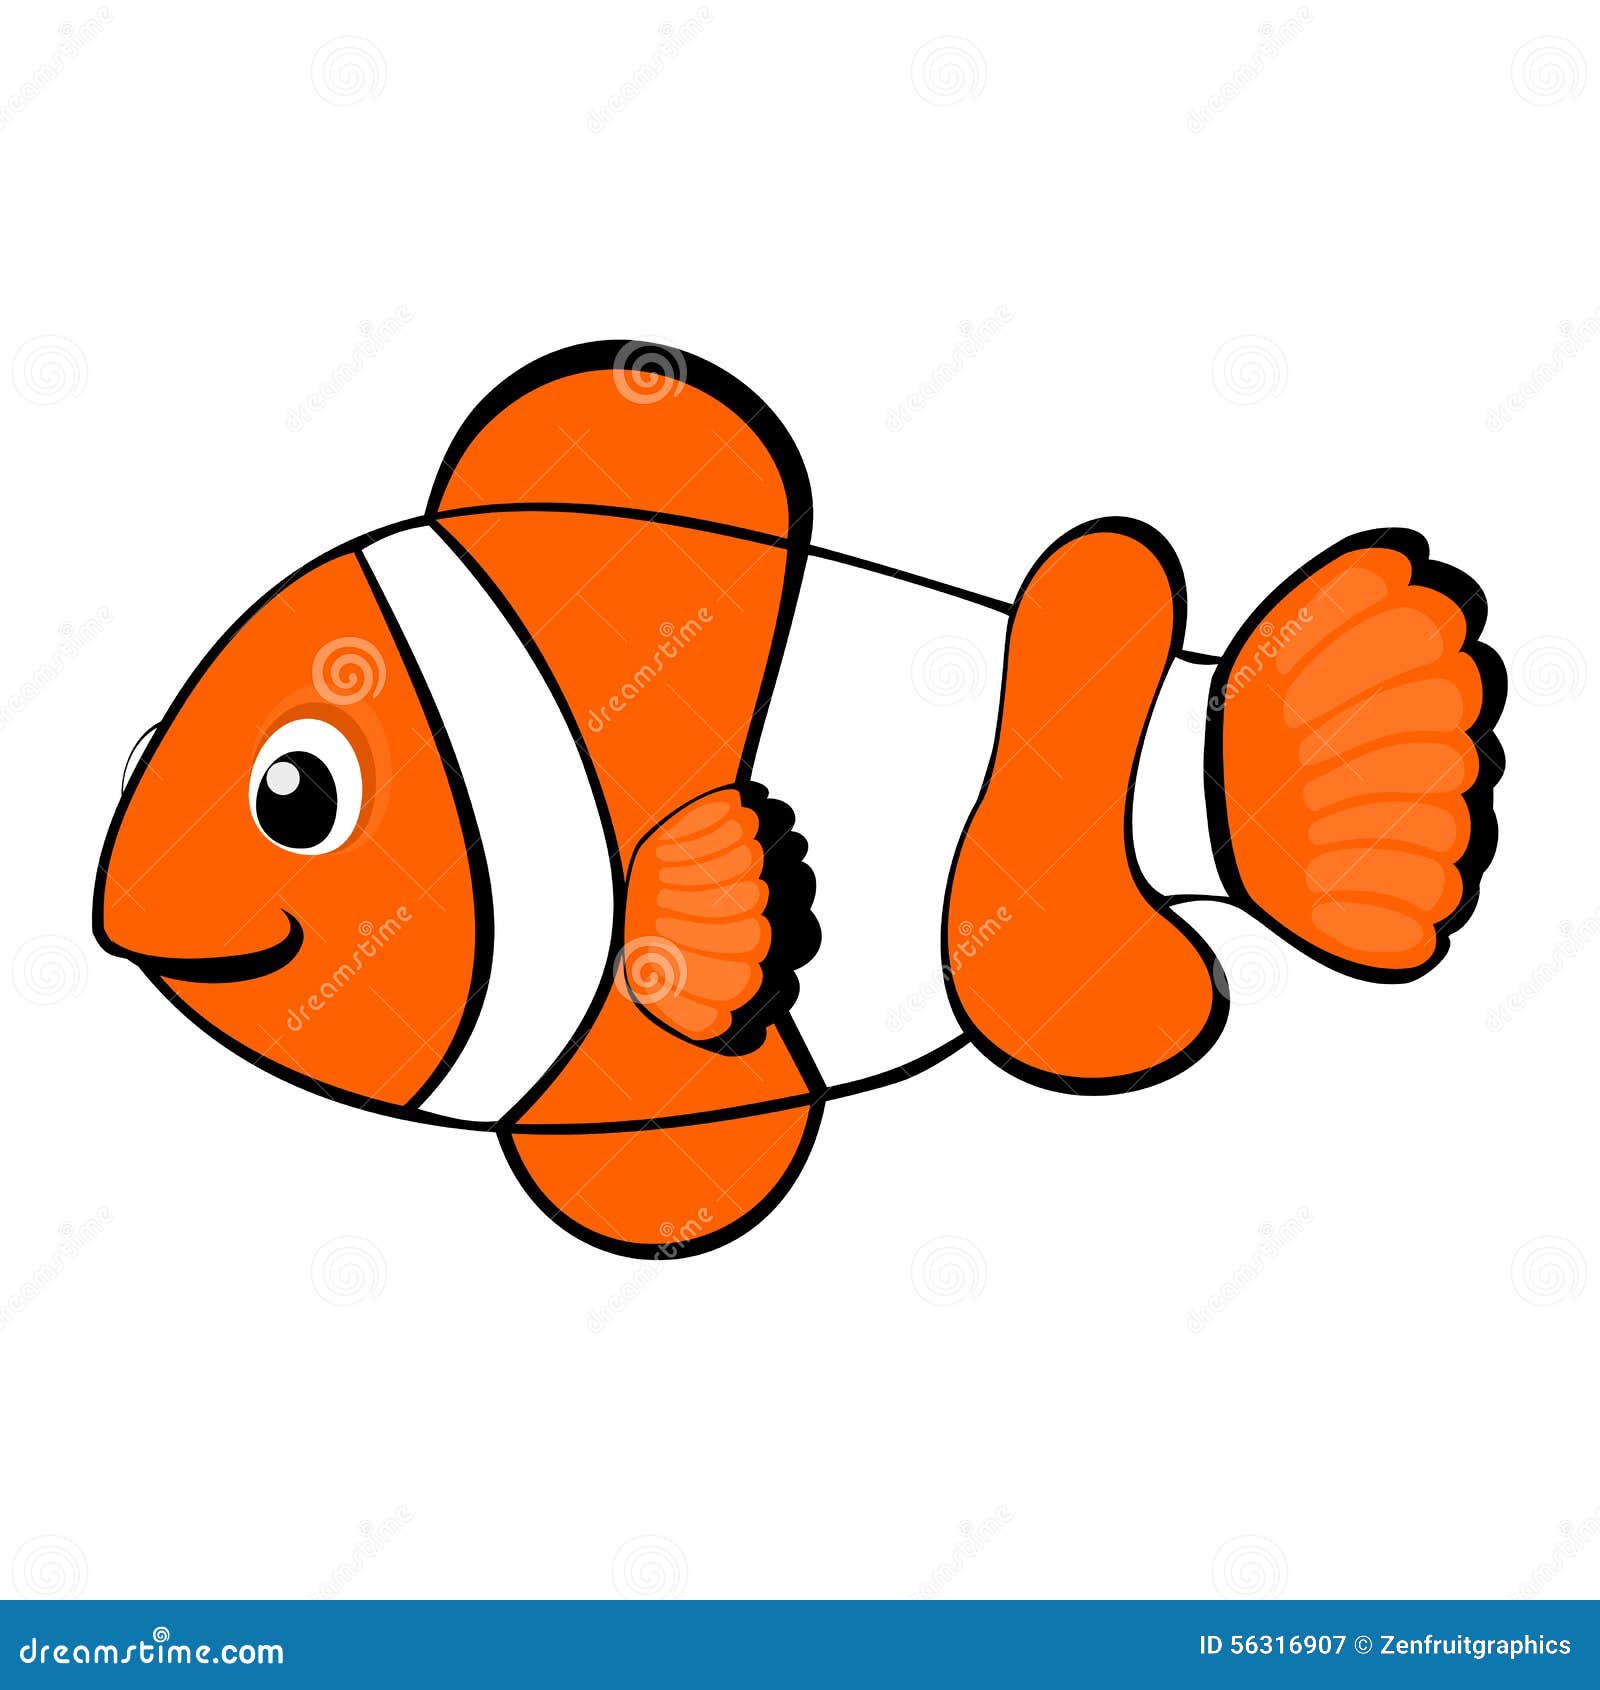 Clown Fish Cartoon Vector Illustration Tropical Sea Life Theme Illustration  Under the Sea Animals Vector Illustration Cute Orange Stock Vector -  Illustration of coral, happy: 56316907